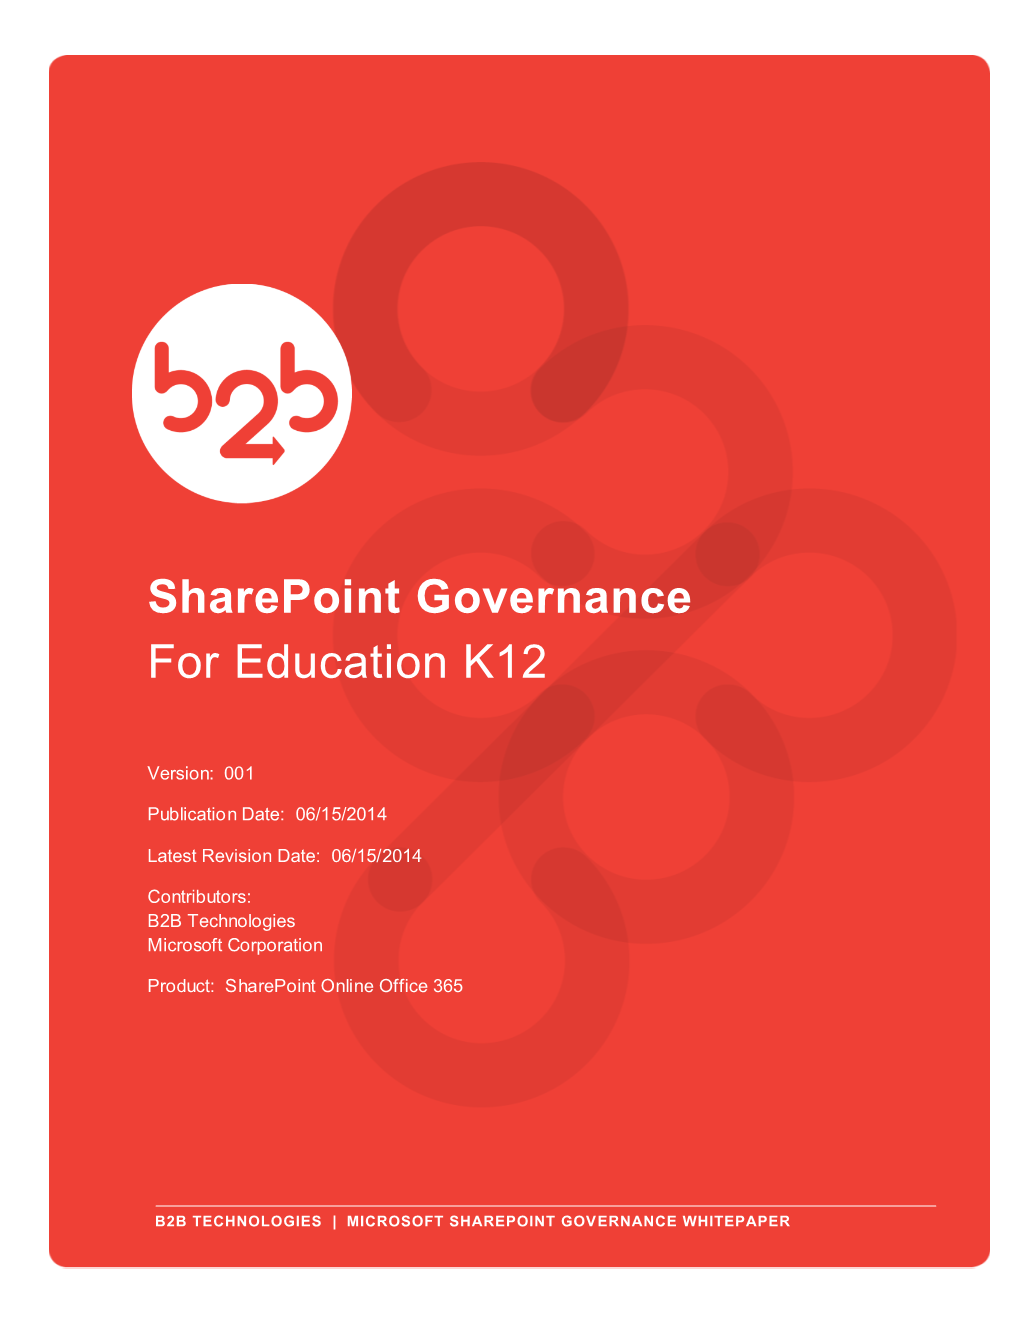 Microsoft Sharepoint Governance Whitepaper Microsoft Sharepoint Governance Whitepaper 1